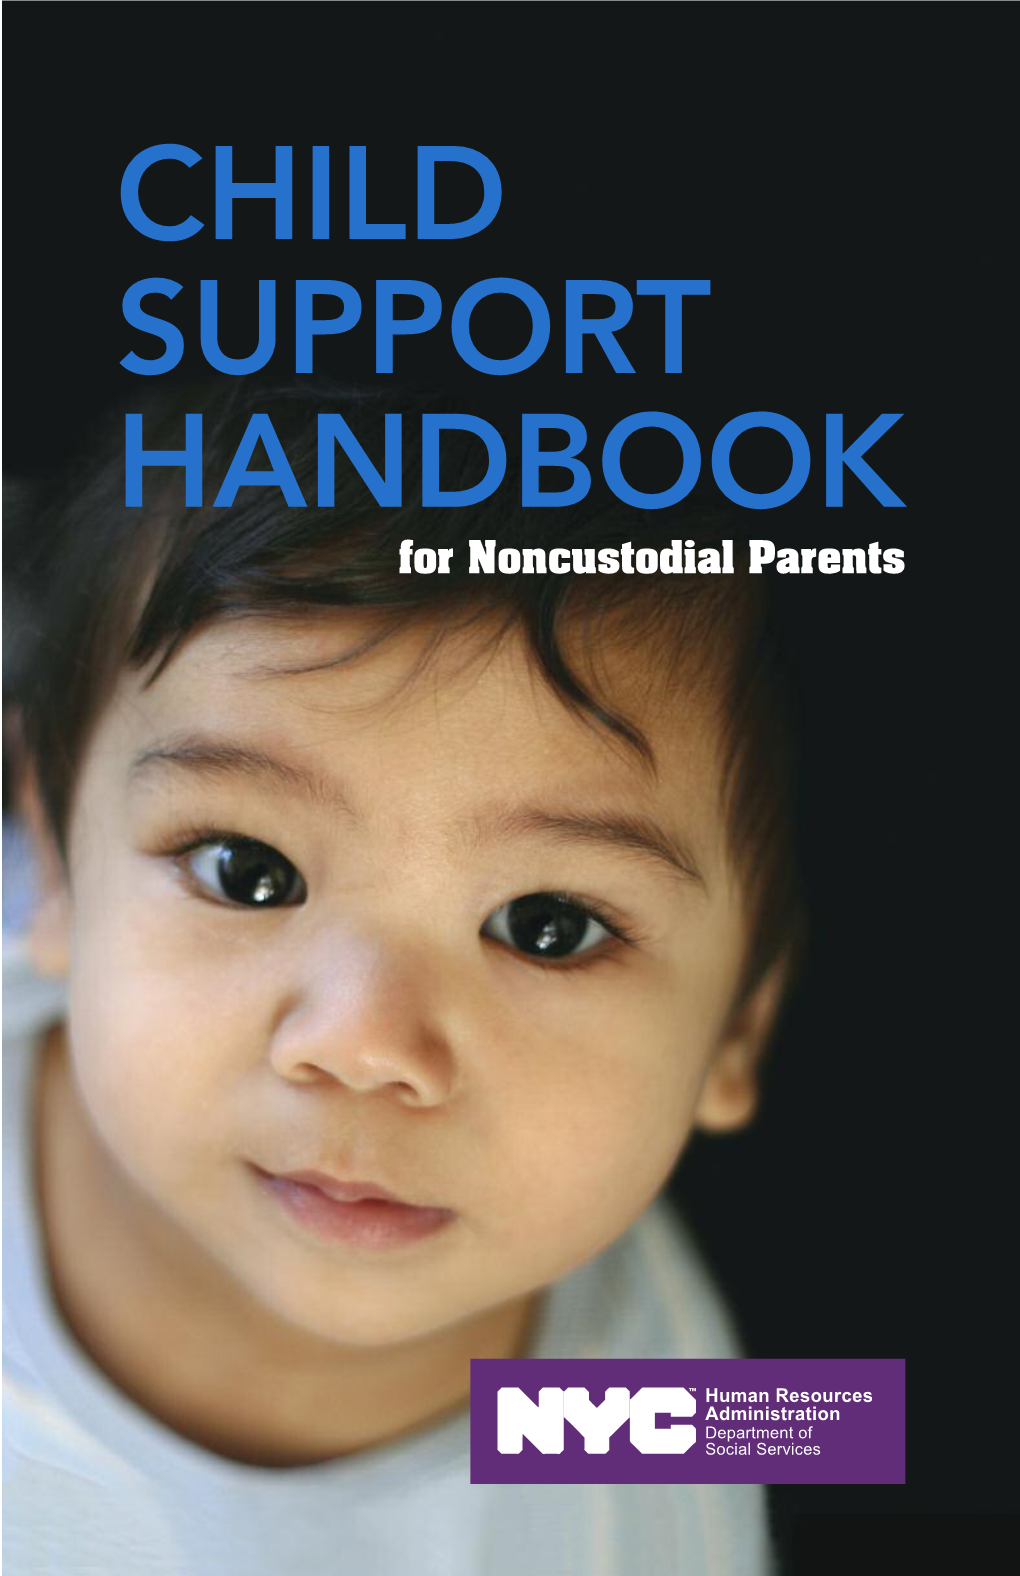 CHILD SUPPORT HANDBOOK for Noncustodial Parents